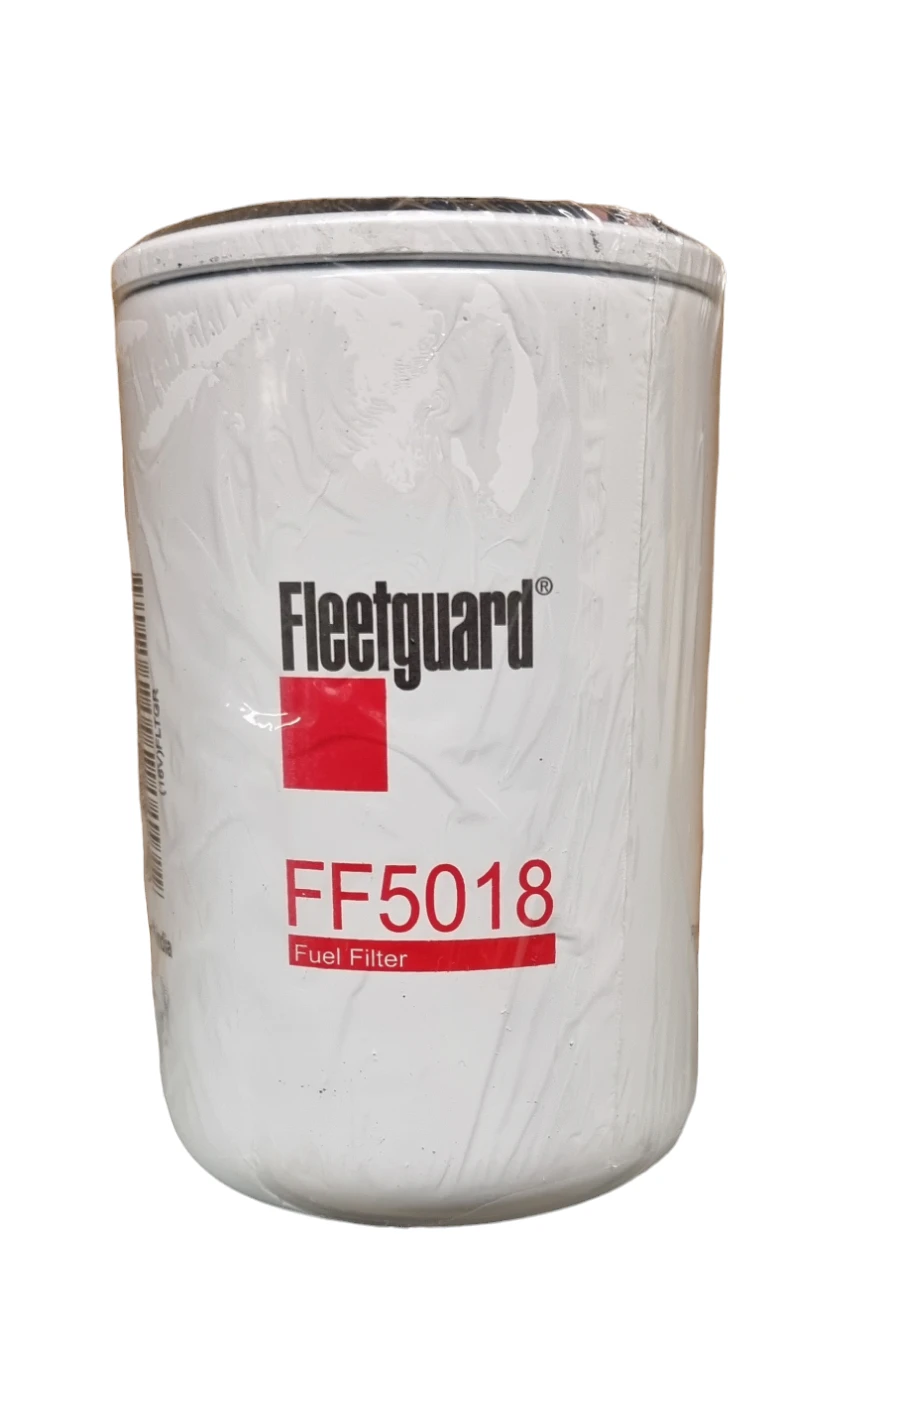 Fleetguard Fuel Filter FF 5018